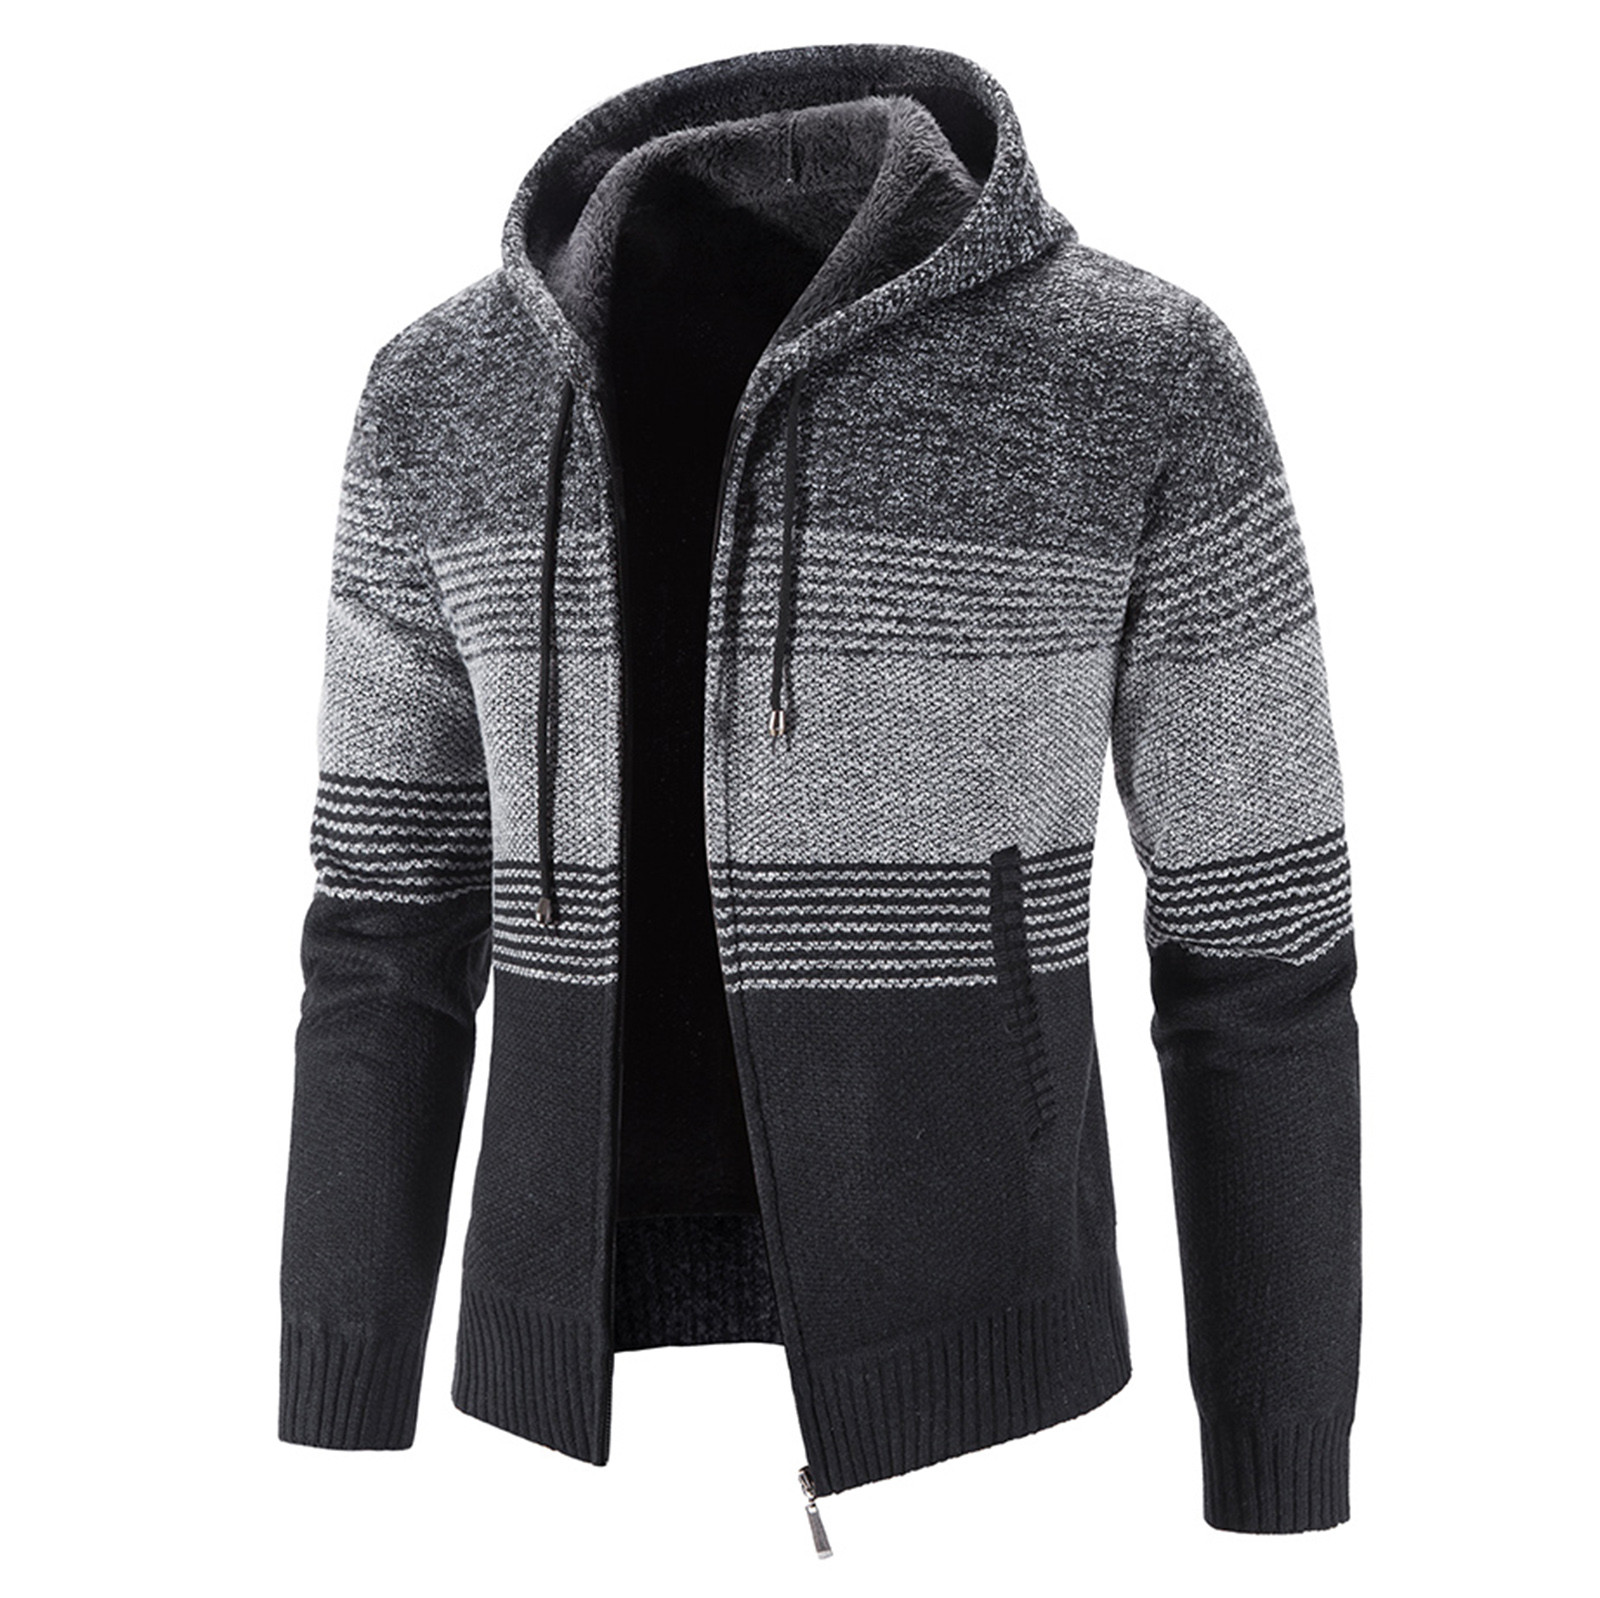 LEEy-world Light Winter Jackets for Men Men's Coats Winter Thicken Cotton Tactical Work Jackets with Hood Dark Gray,3XL - image 3 of 3